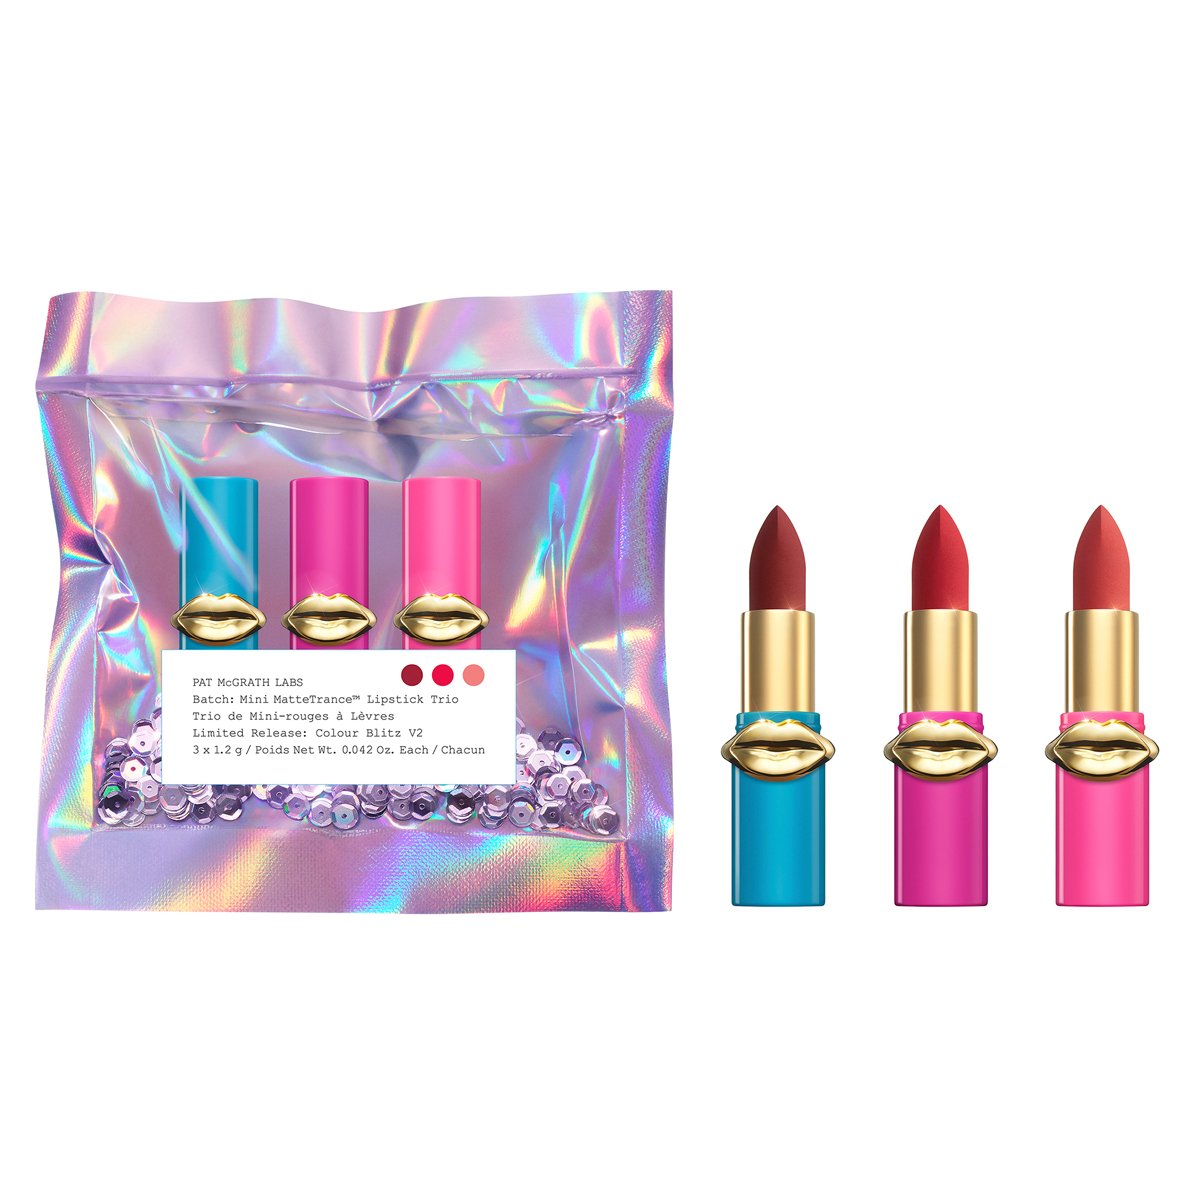 Pat McGrath Labs Mini MATTETRANCE™ Lipstick Trio Colour Blitz V2